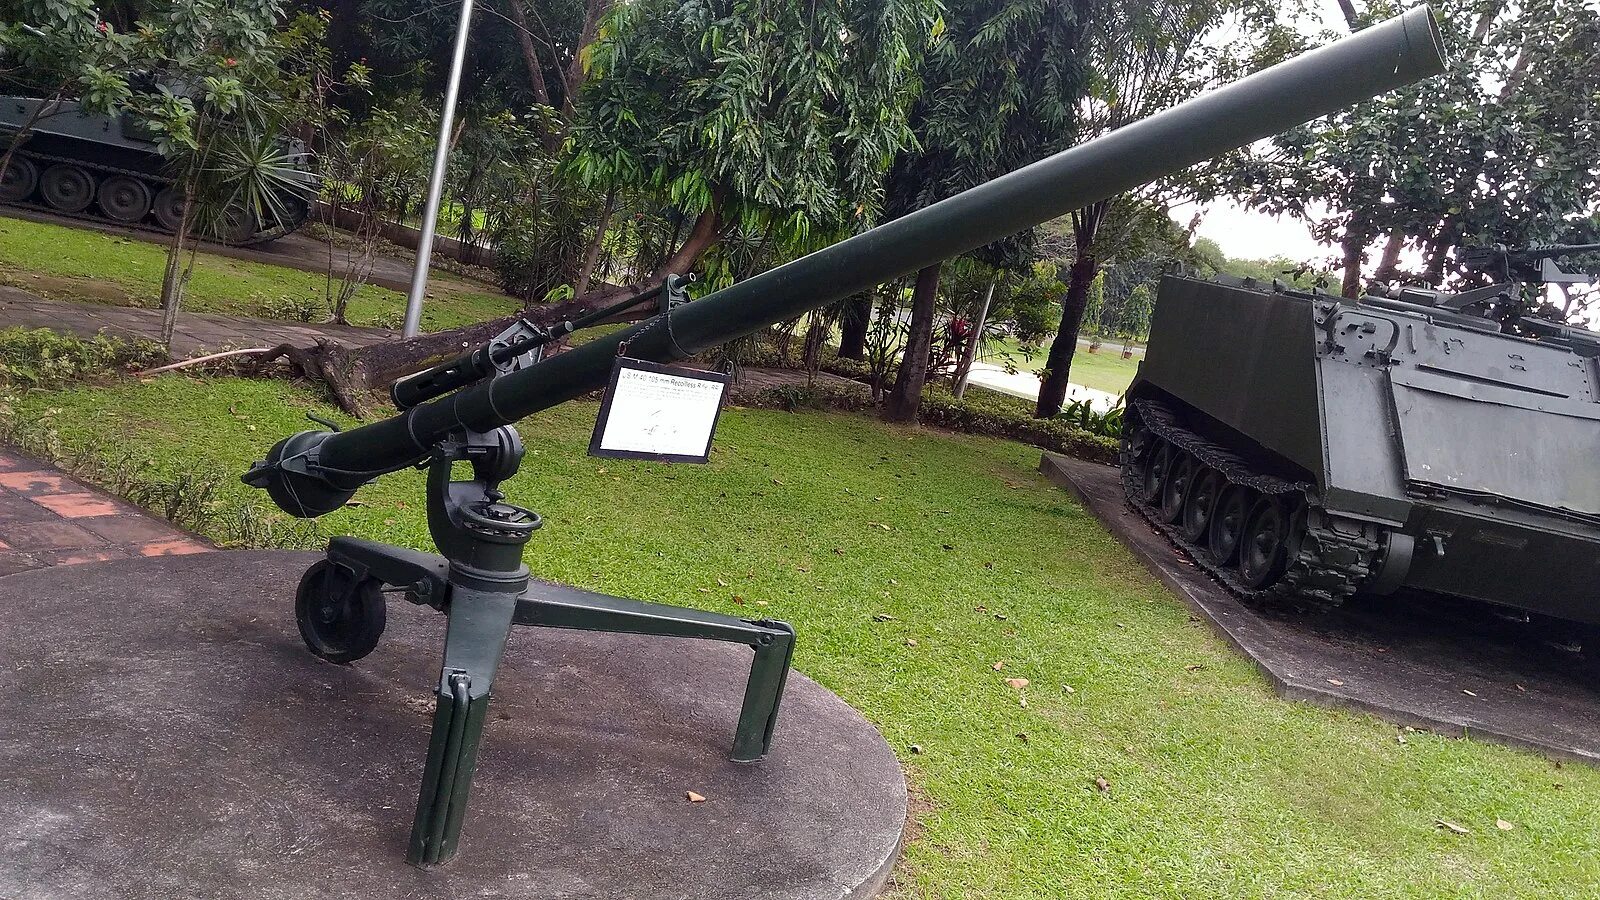 106 мм в м. 106-Мм безоткатное орудие м40. 106 Мм безоткатное орудие m40. M40 безоткатное орудие. M40 Recoilless Rifle.